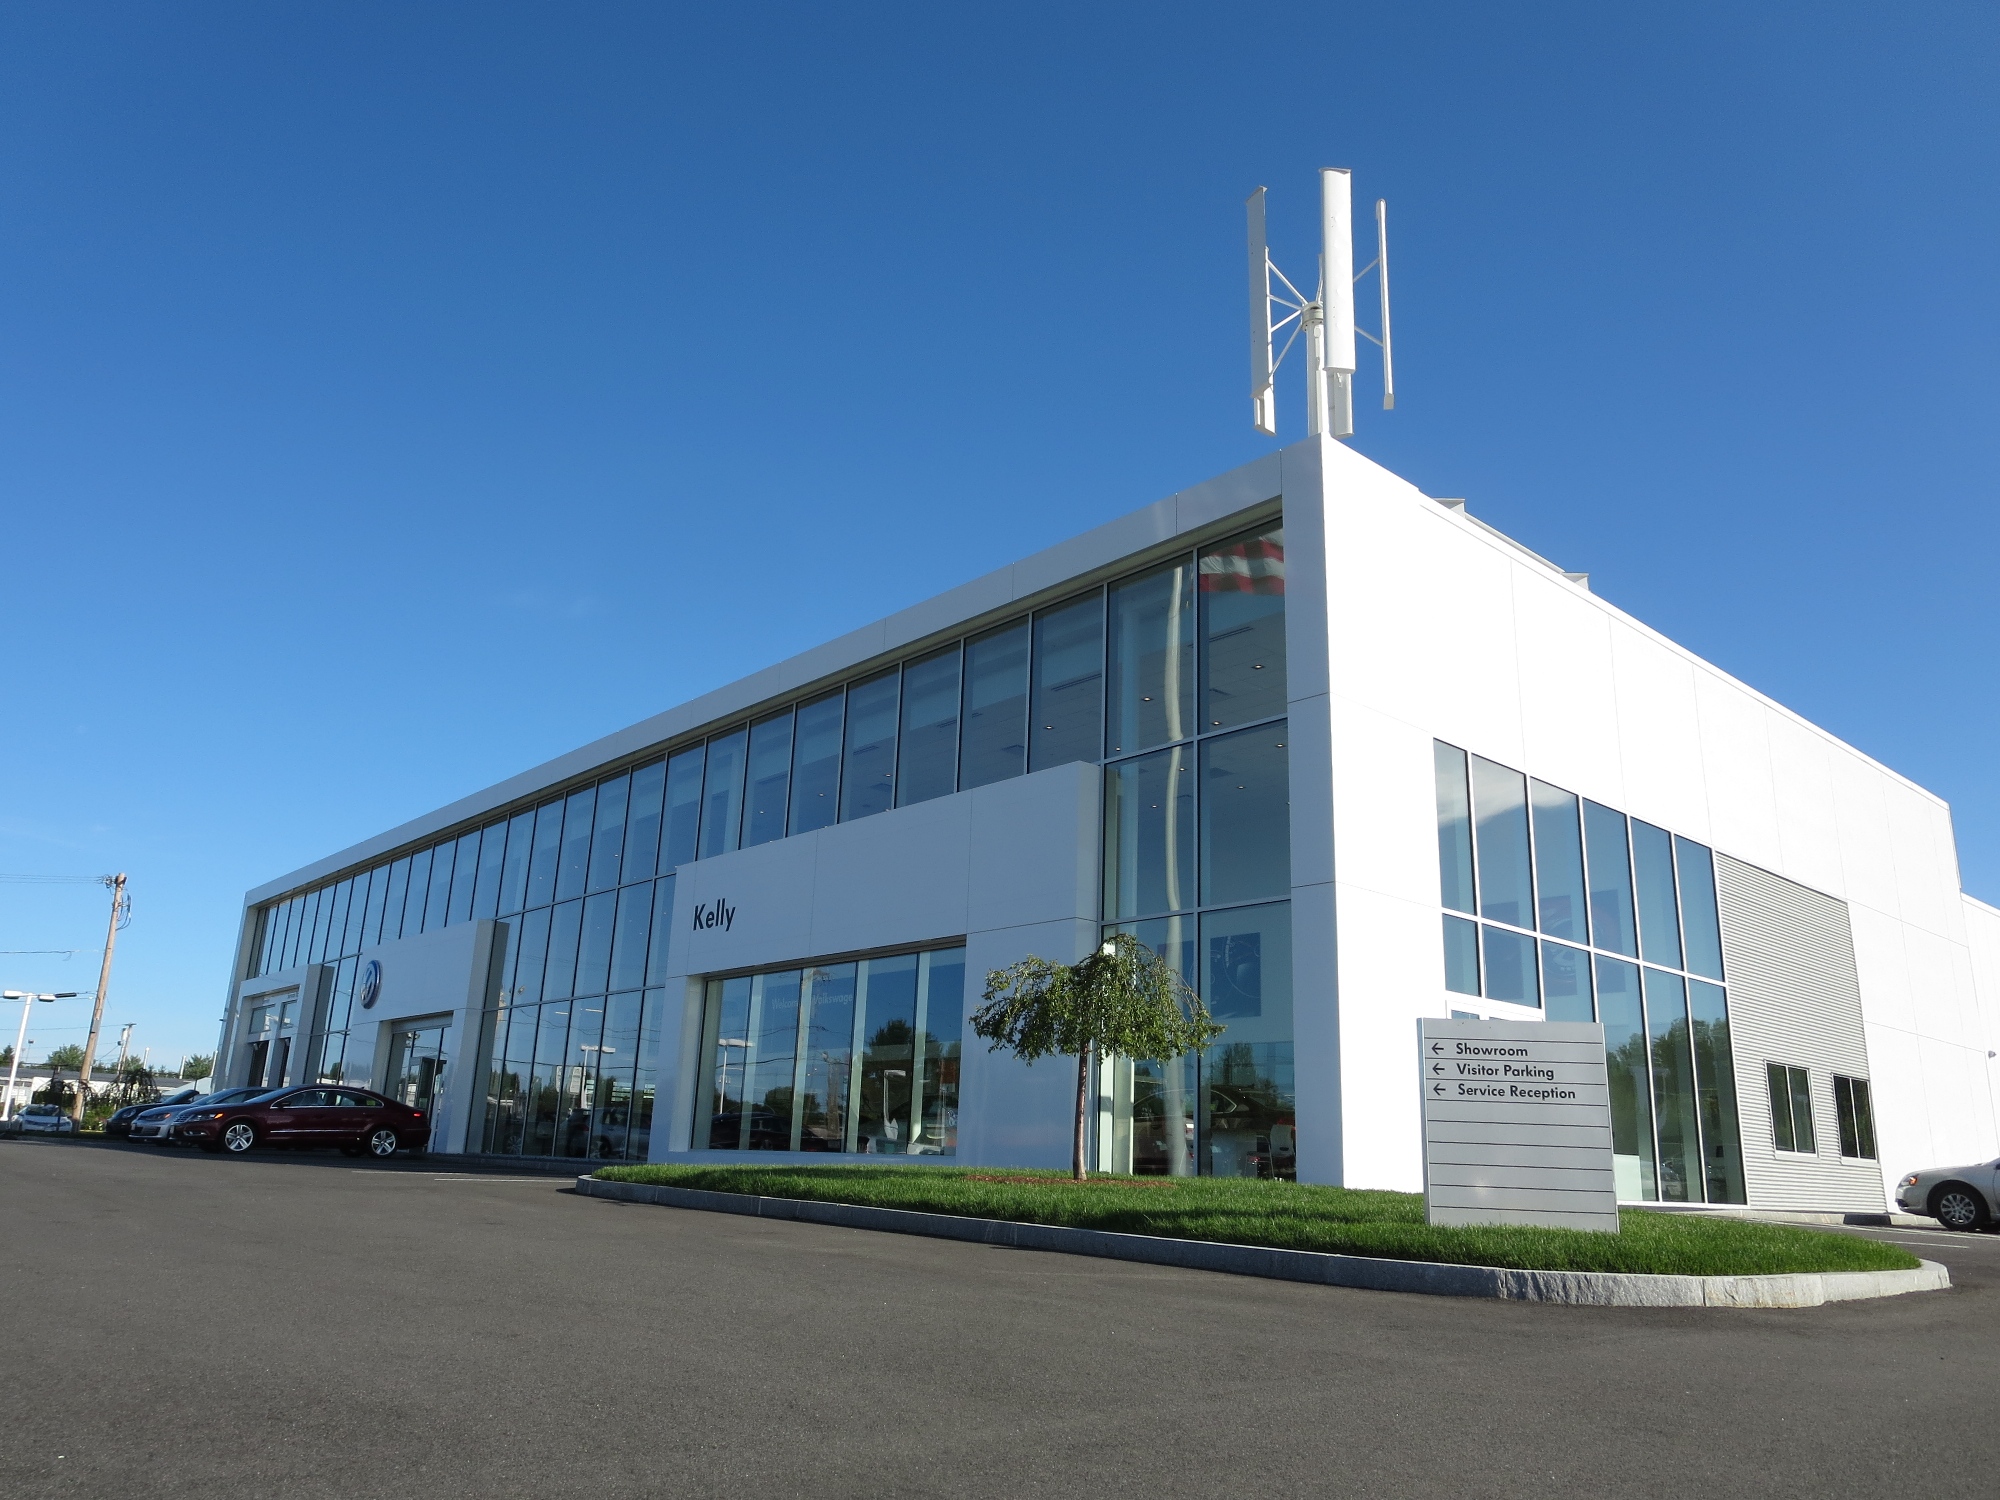 Kelly Volkswagen's new dealership is the largest Volkswagen dealership in North America. It's 